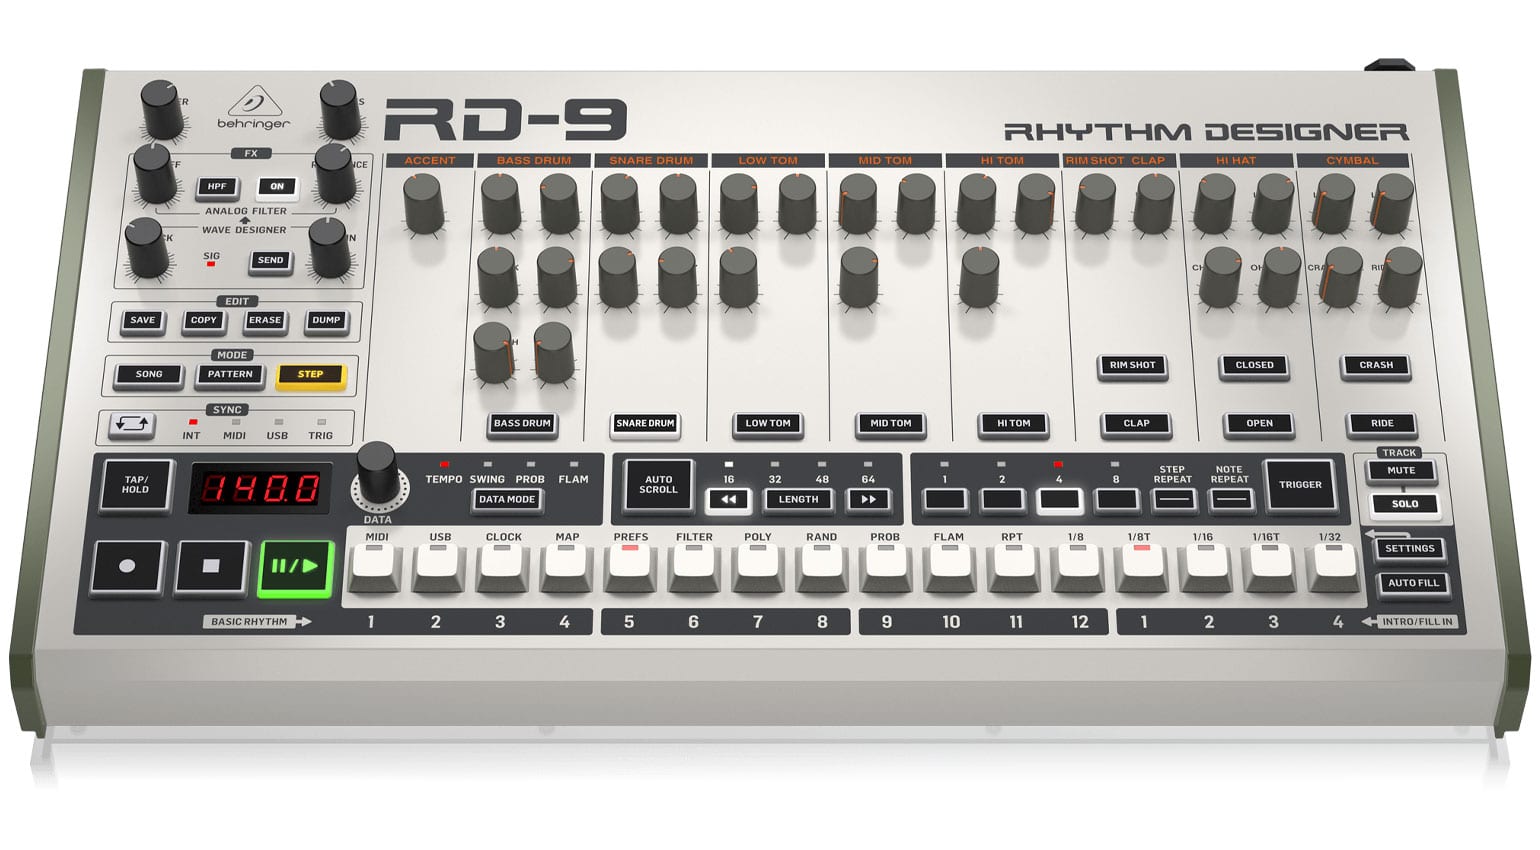 Behringer RD-9 Rhythm Designer full details and price - gearnews.com